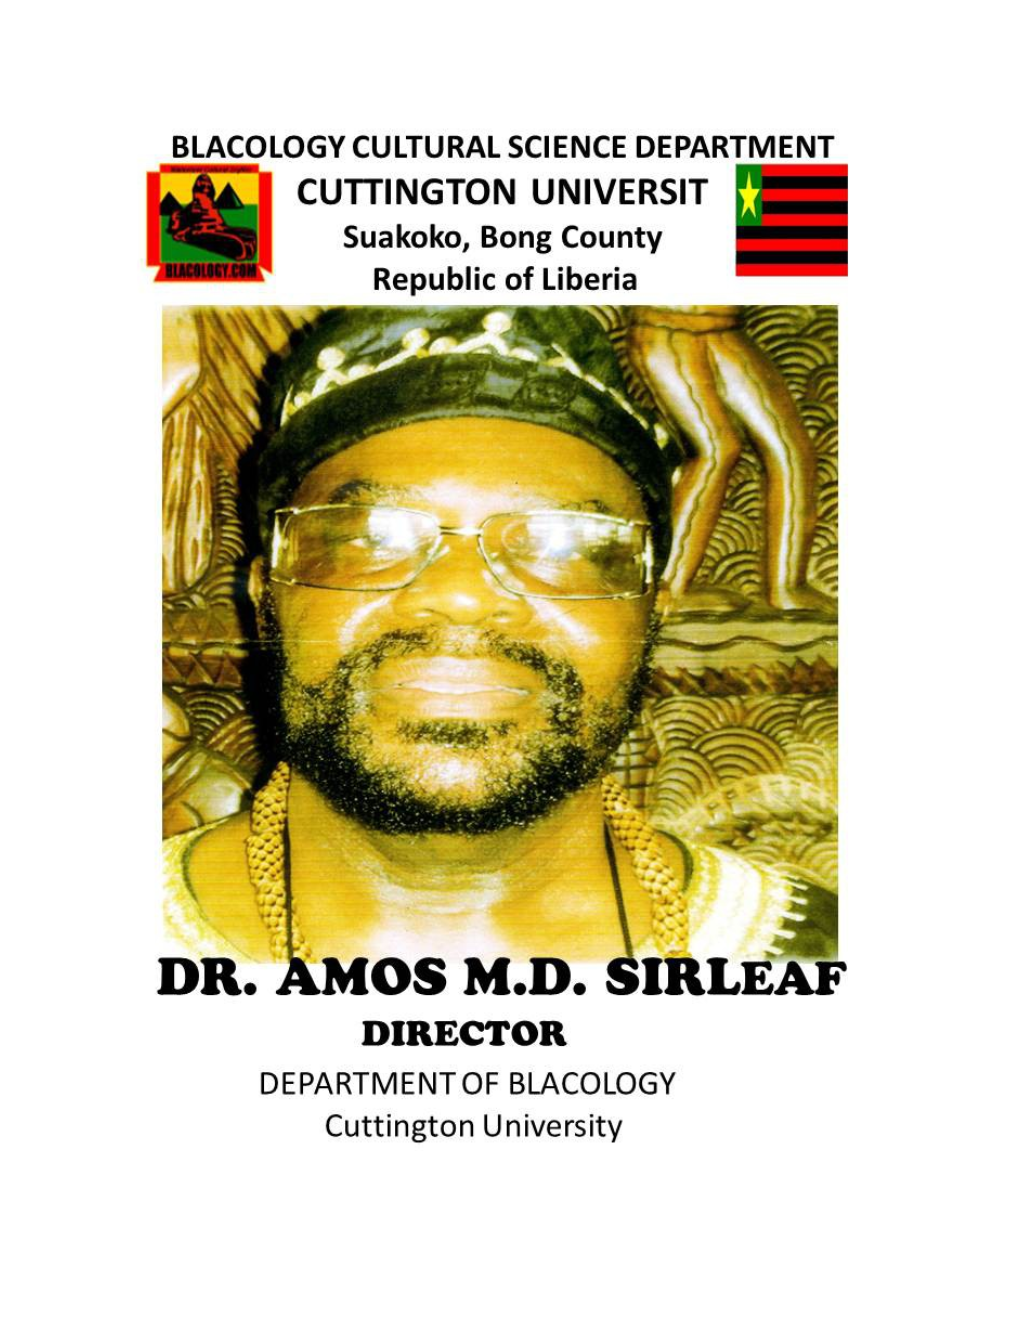 FROM: Dr. Amos M.D.Sirleaf (Ph.D.) Professor